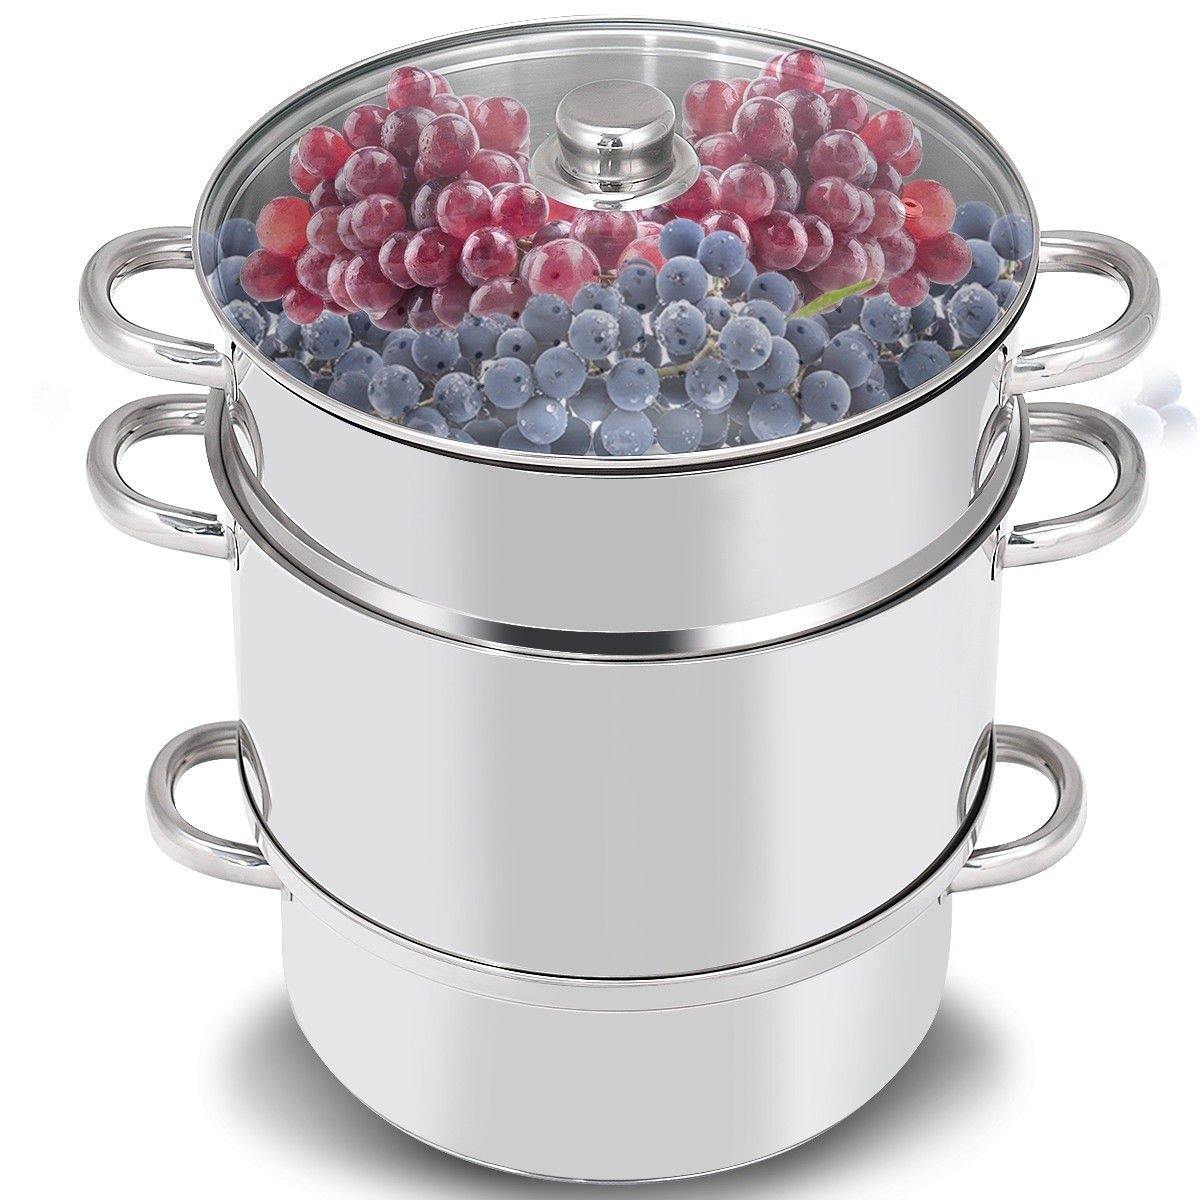 Steam Juicer for Canning-5 Quart, Stainless Steel Fruit Vegetables